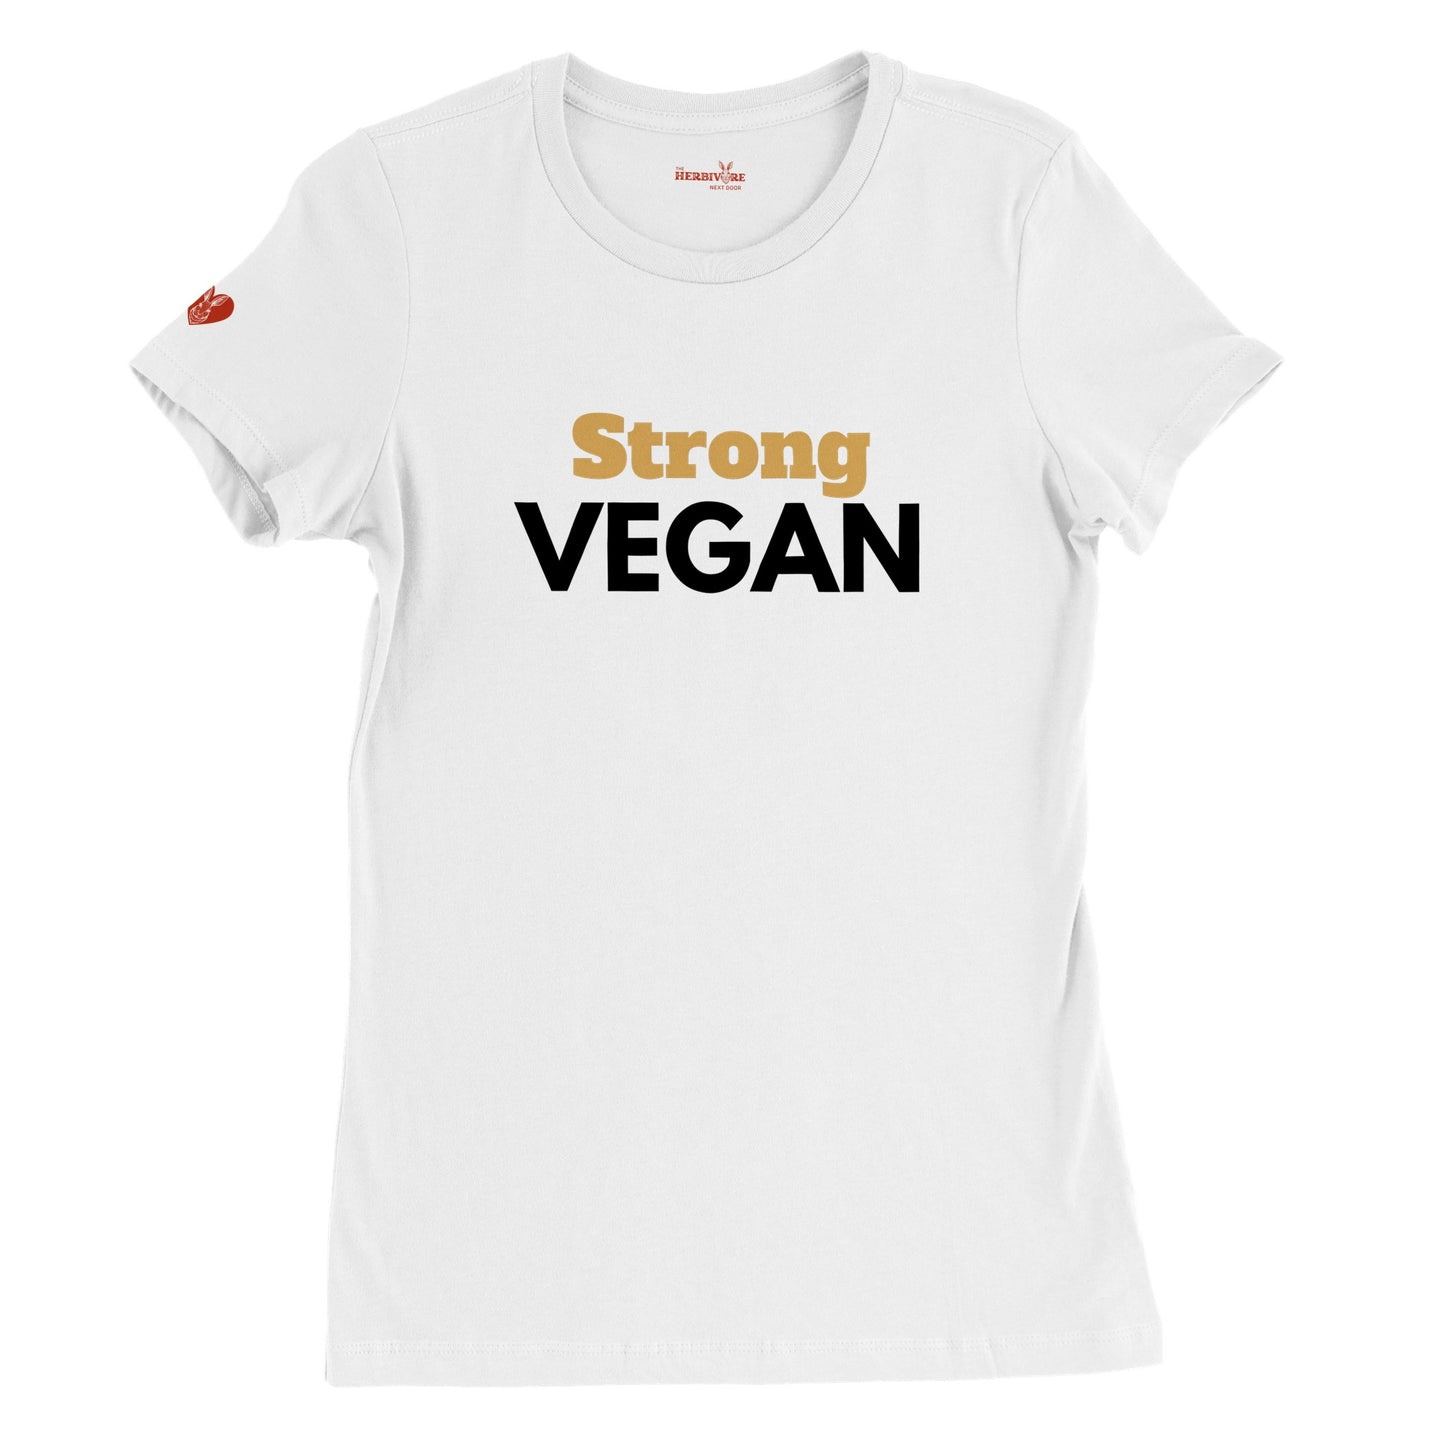 Strong Vegan - Women's Style